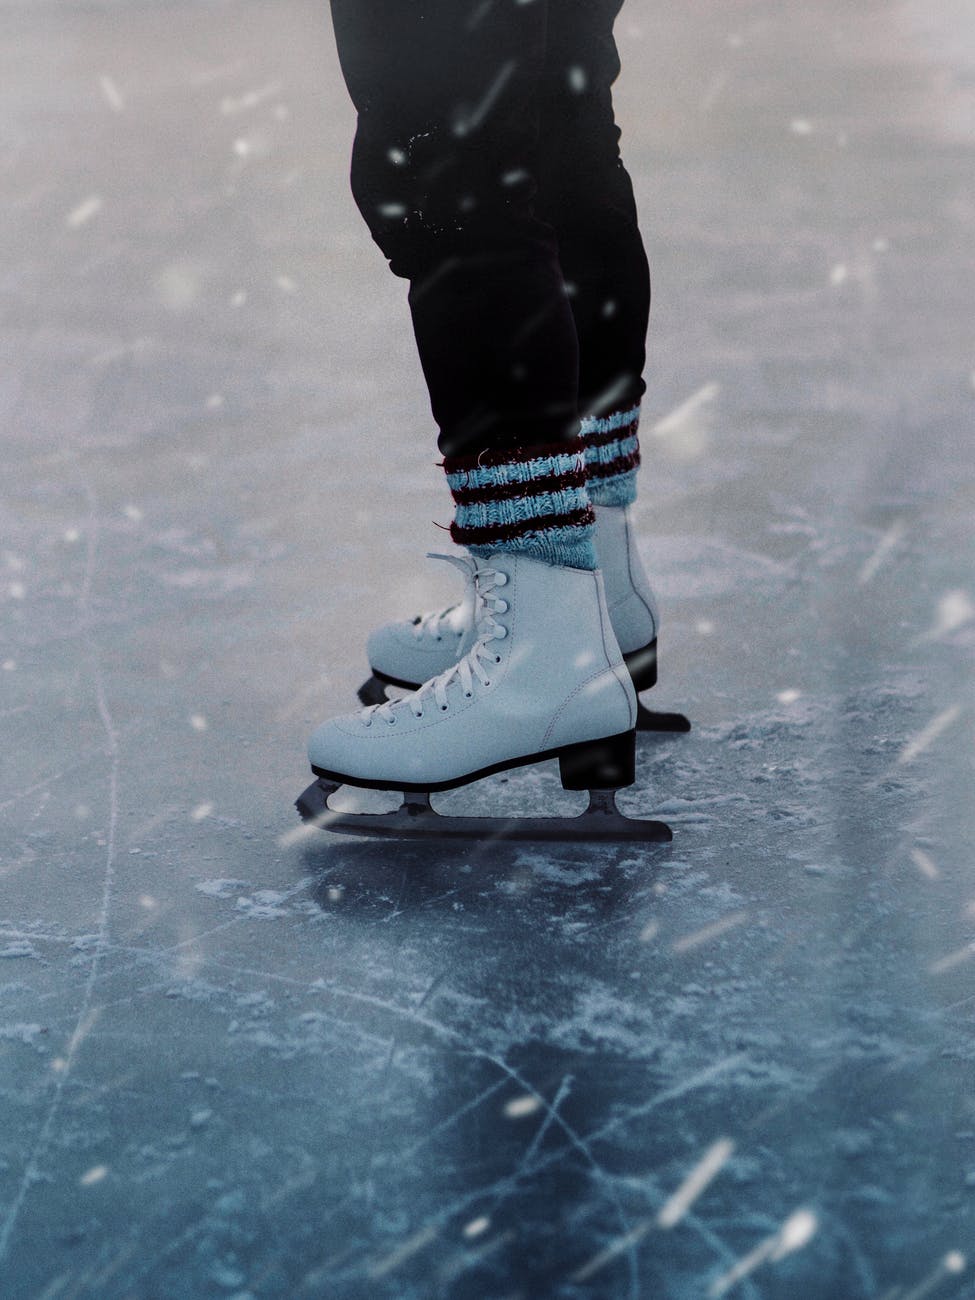 person ice skating